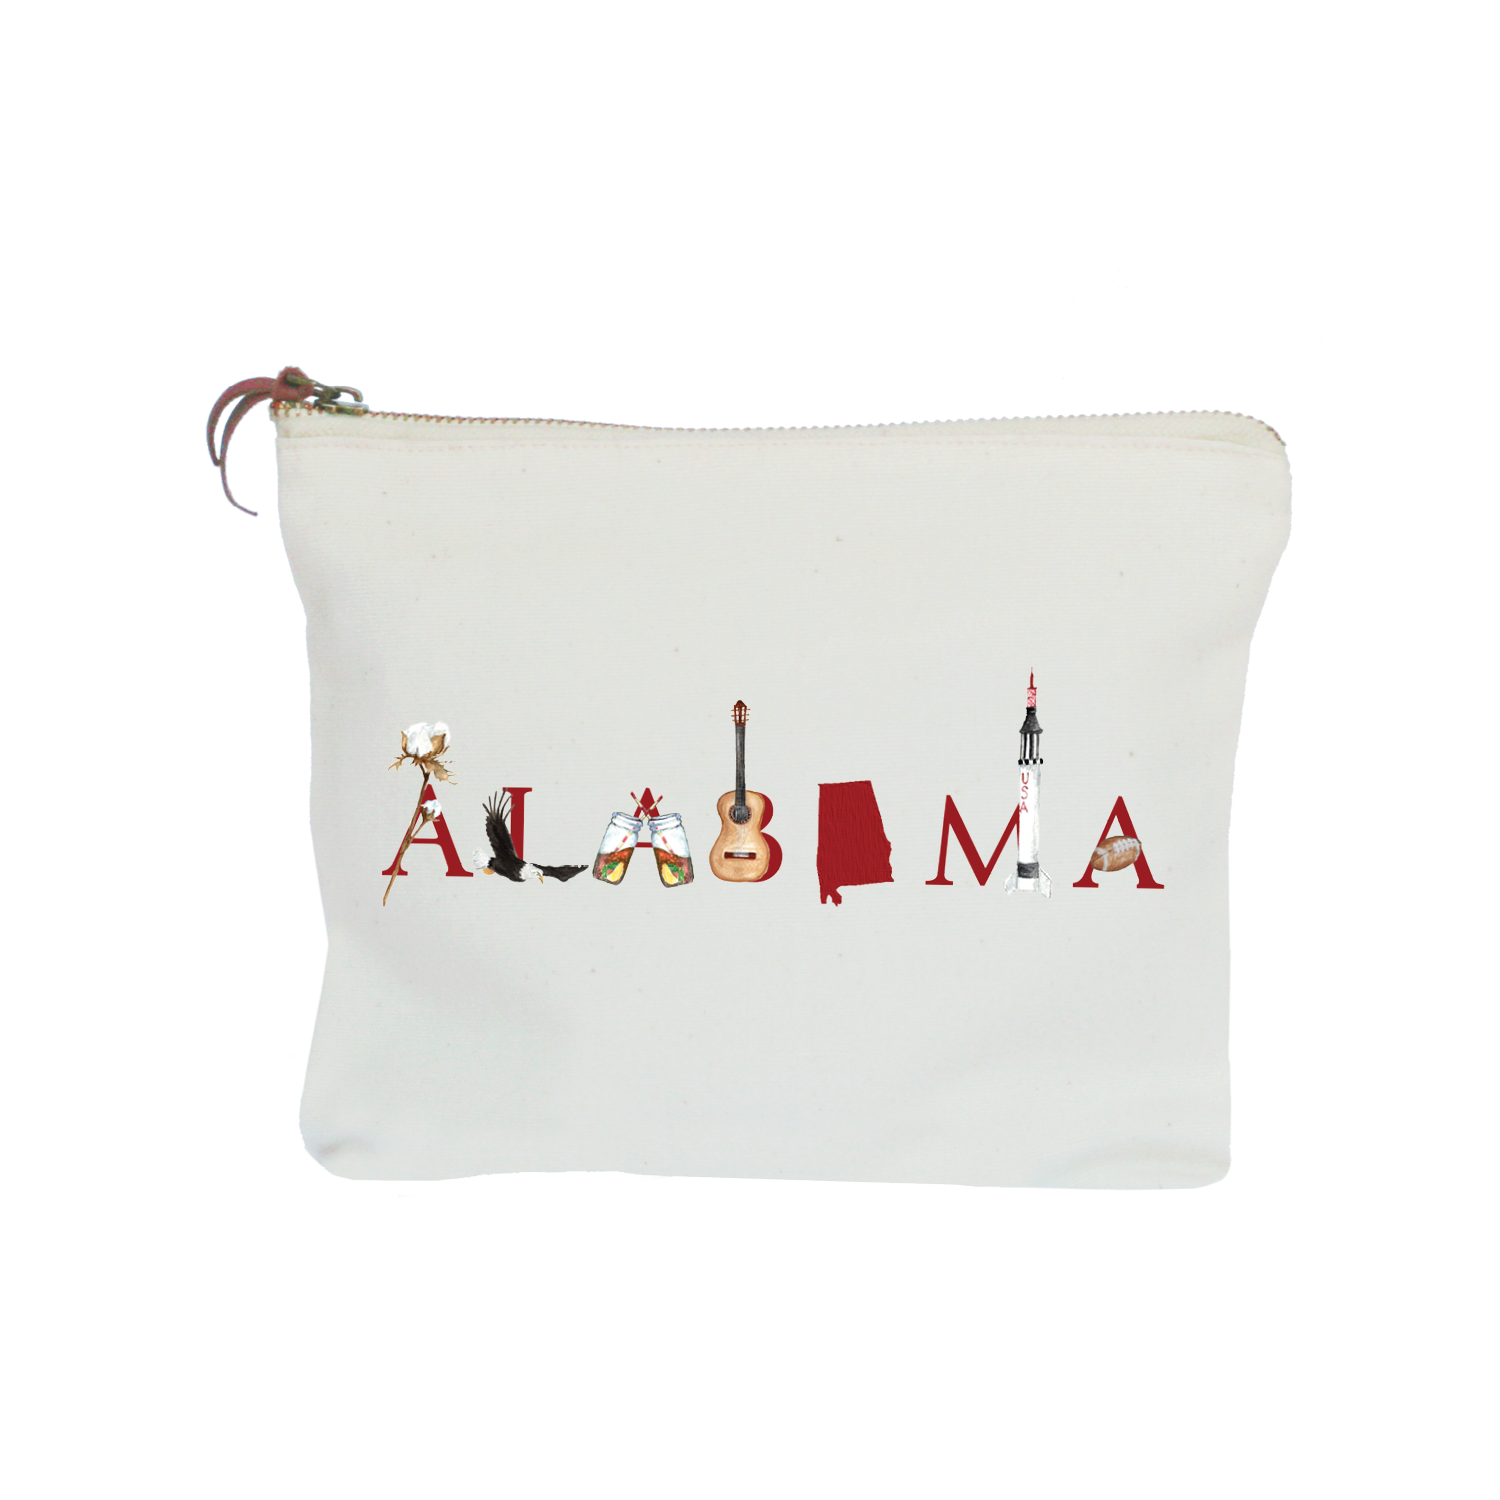 Alabama zipper pouch